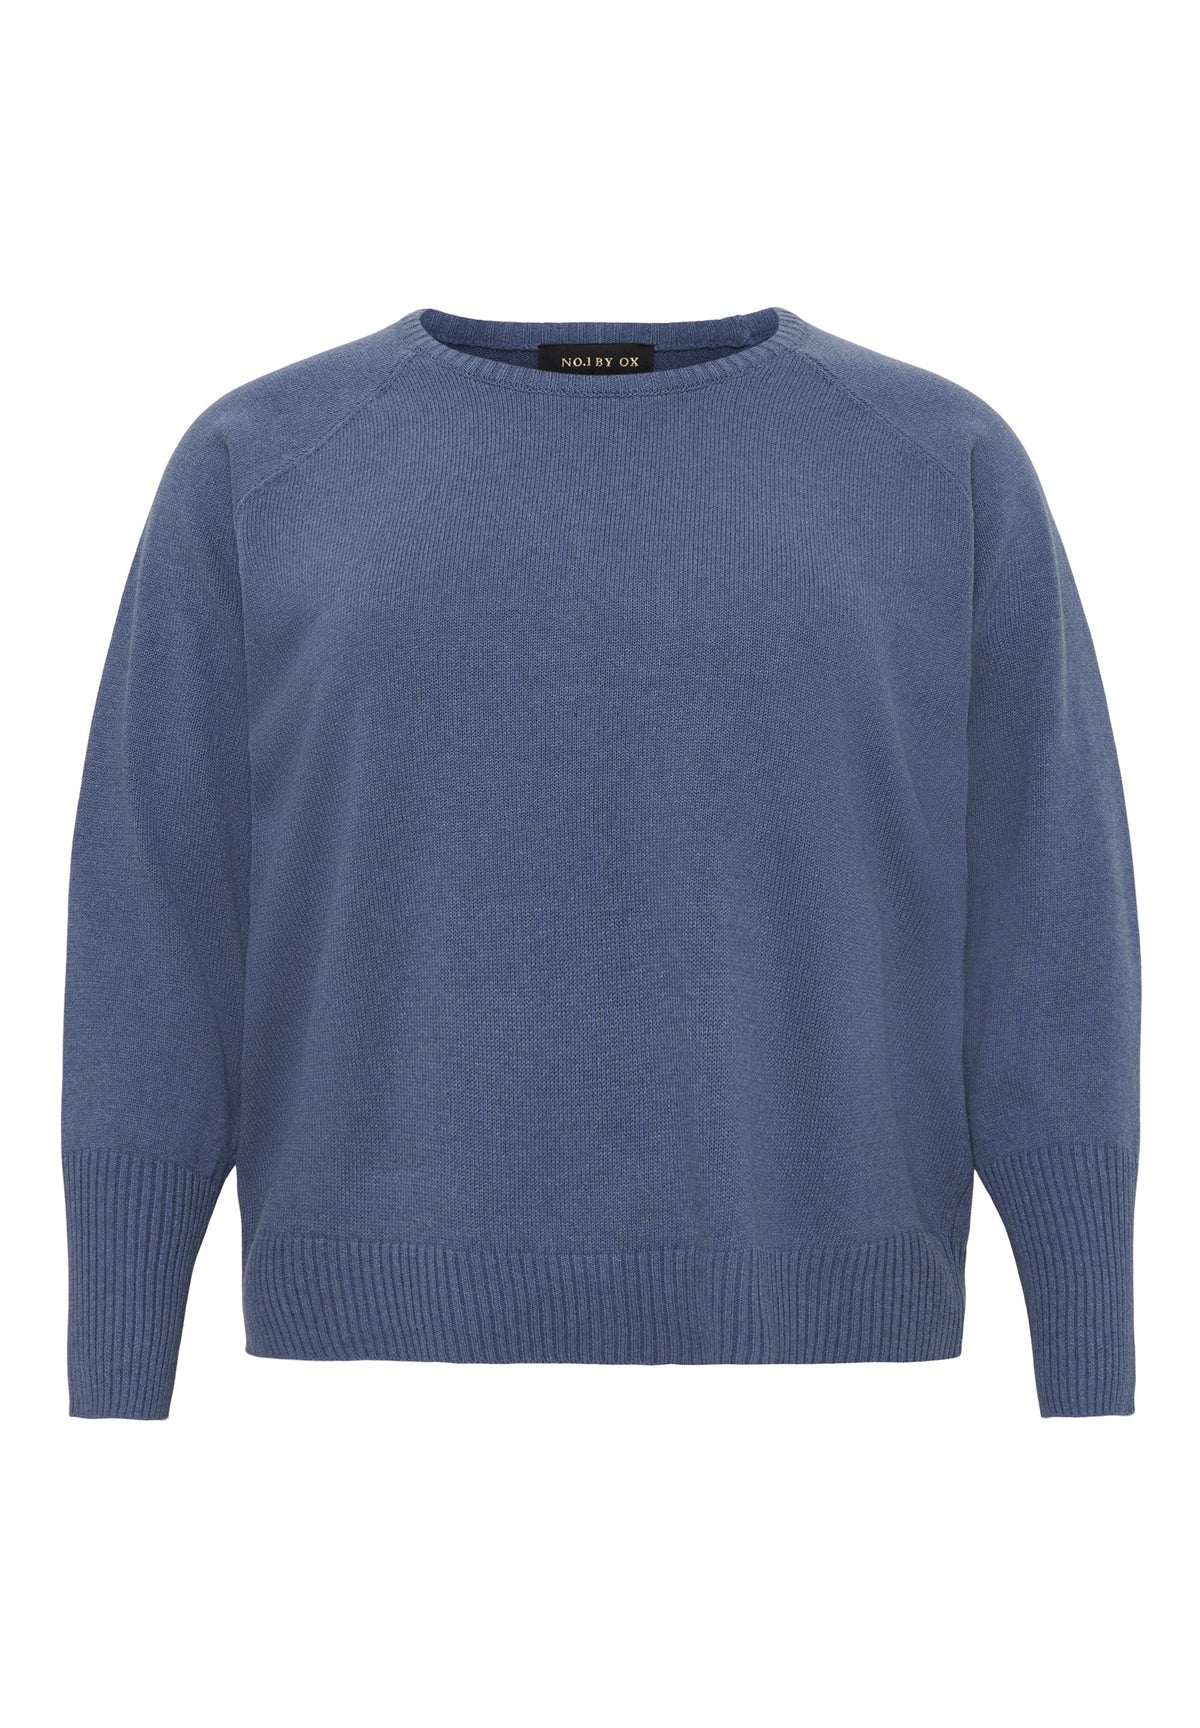 NO. 1 BY OX Striktrøje i bomuld Sweaters Blå